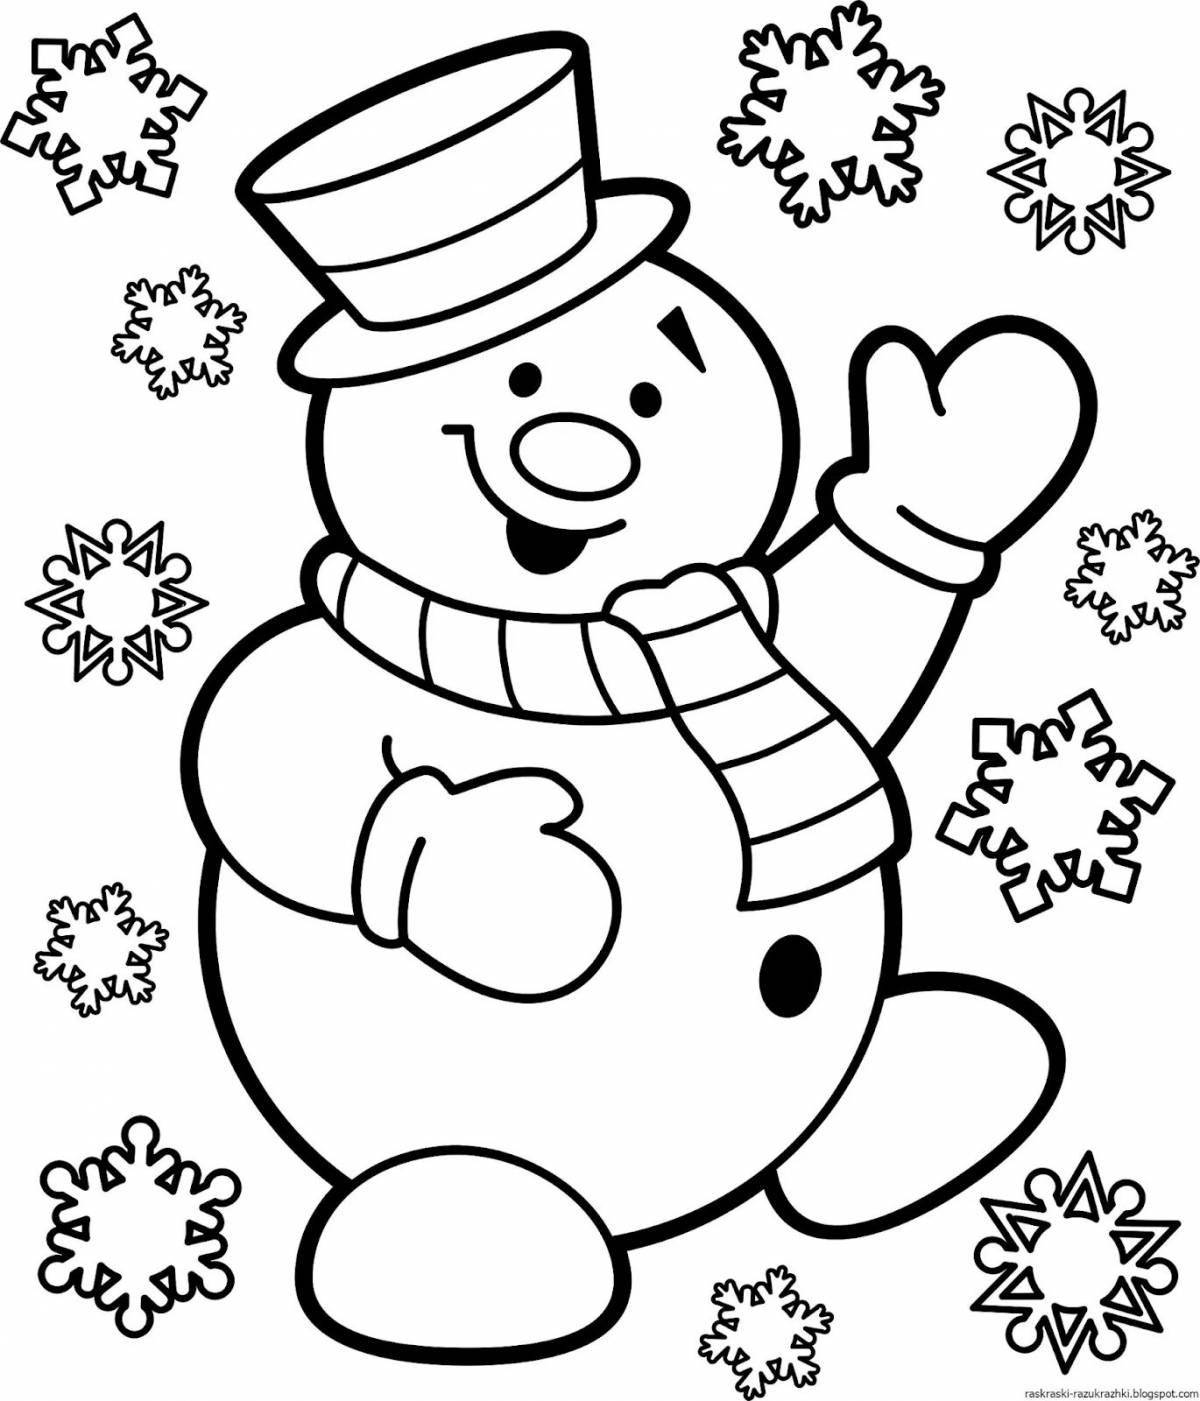 Delightful snowman coloring book